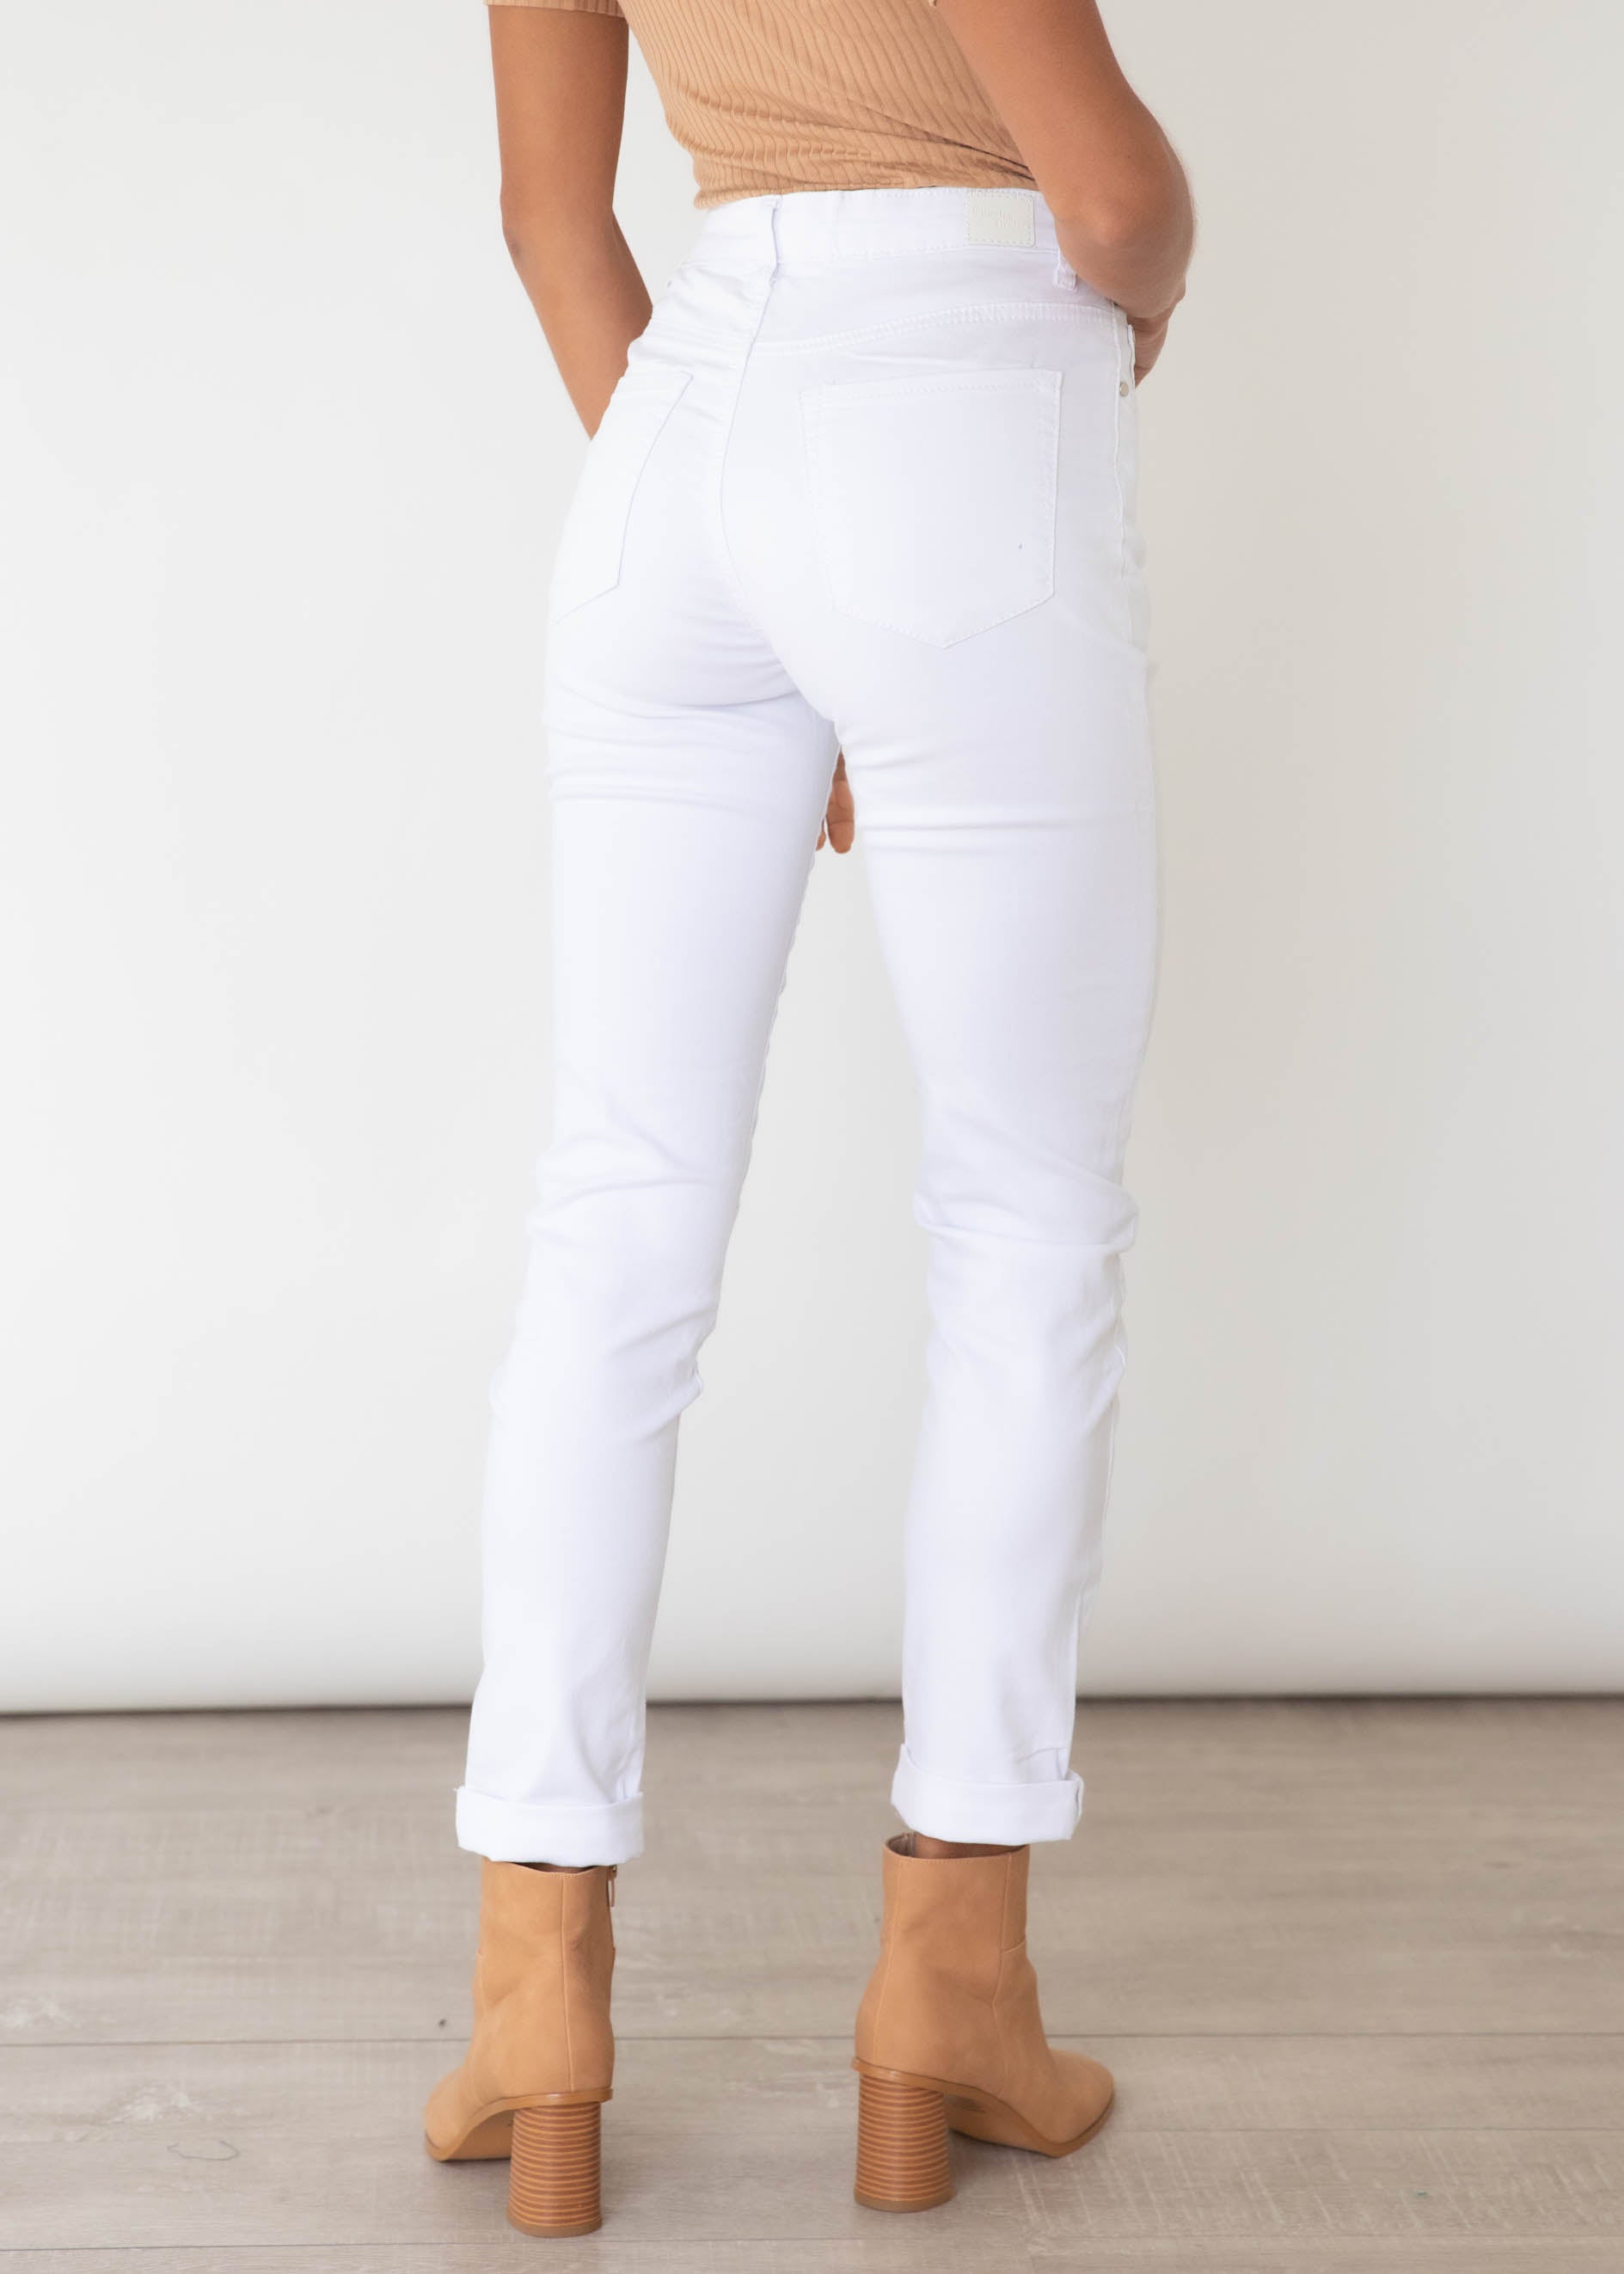 Canada Stretch Jeans - White